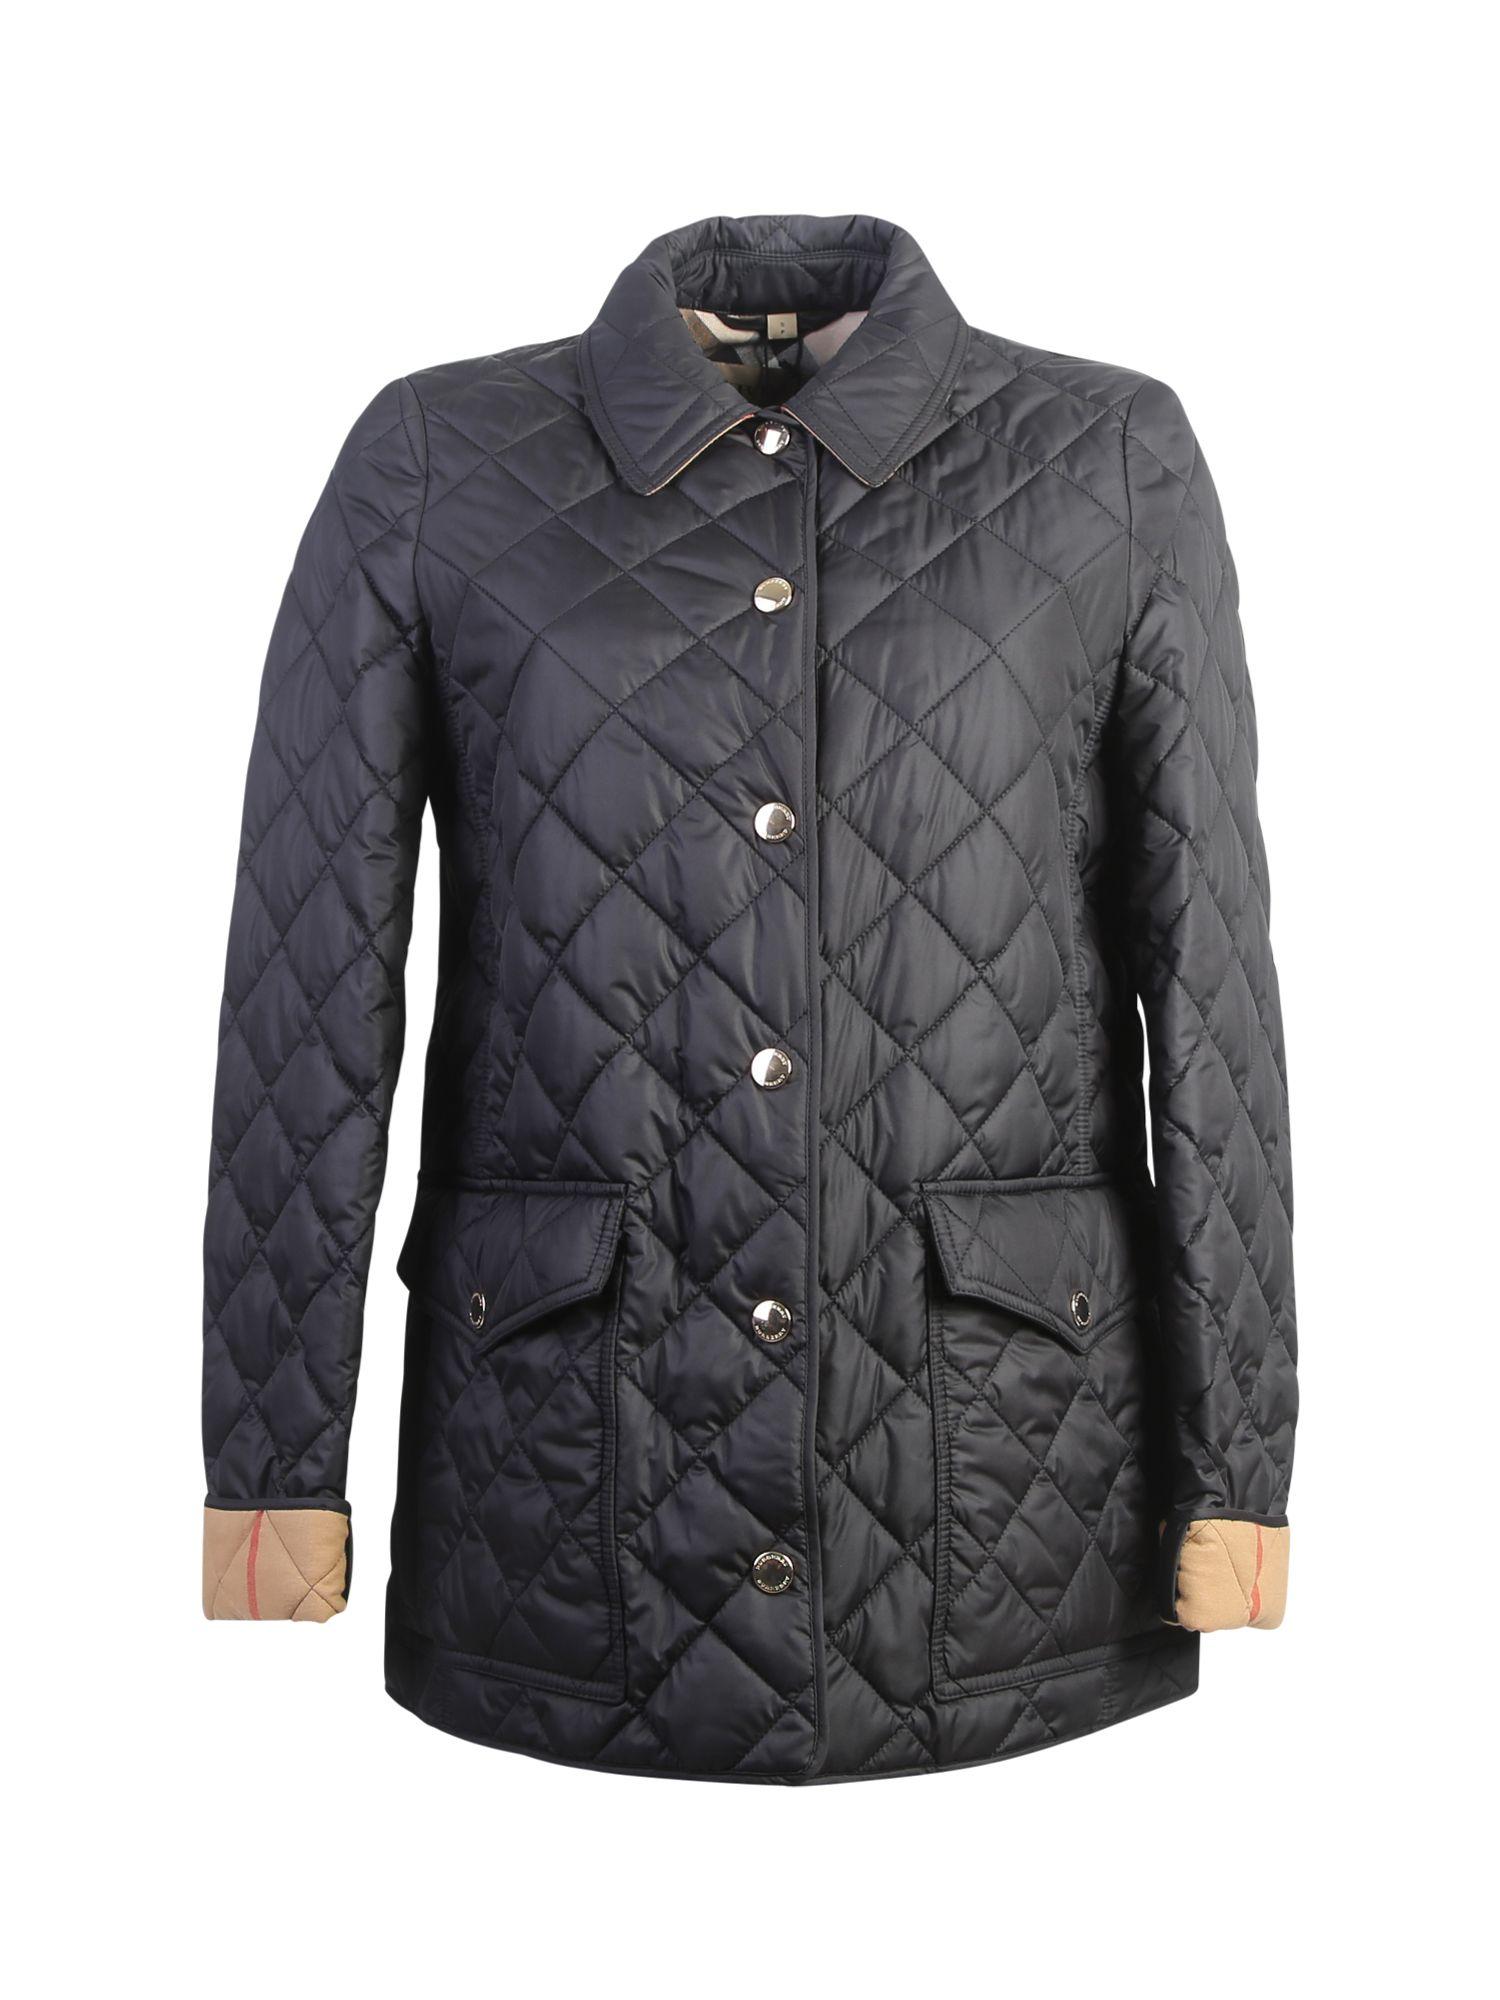 burberry westbridge quilted jacket black